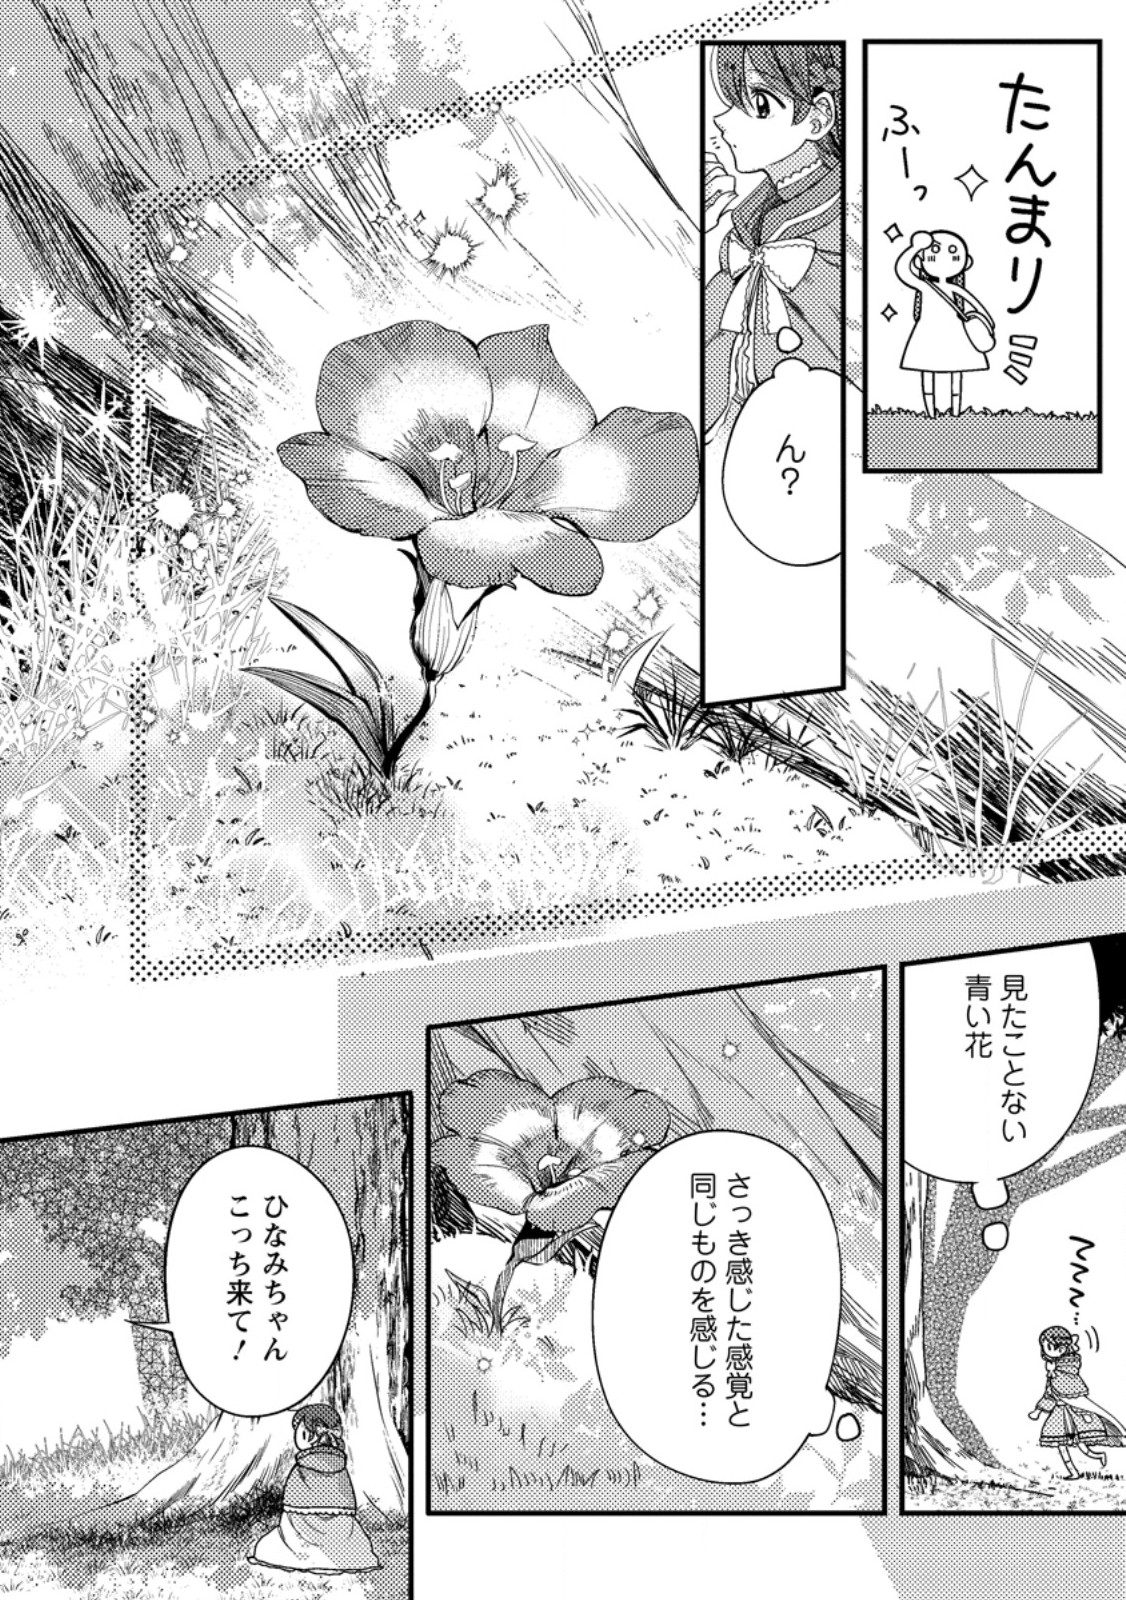 Hakoniwa no Yakujutsushi - Chapter 35.2 - Page 8